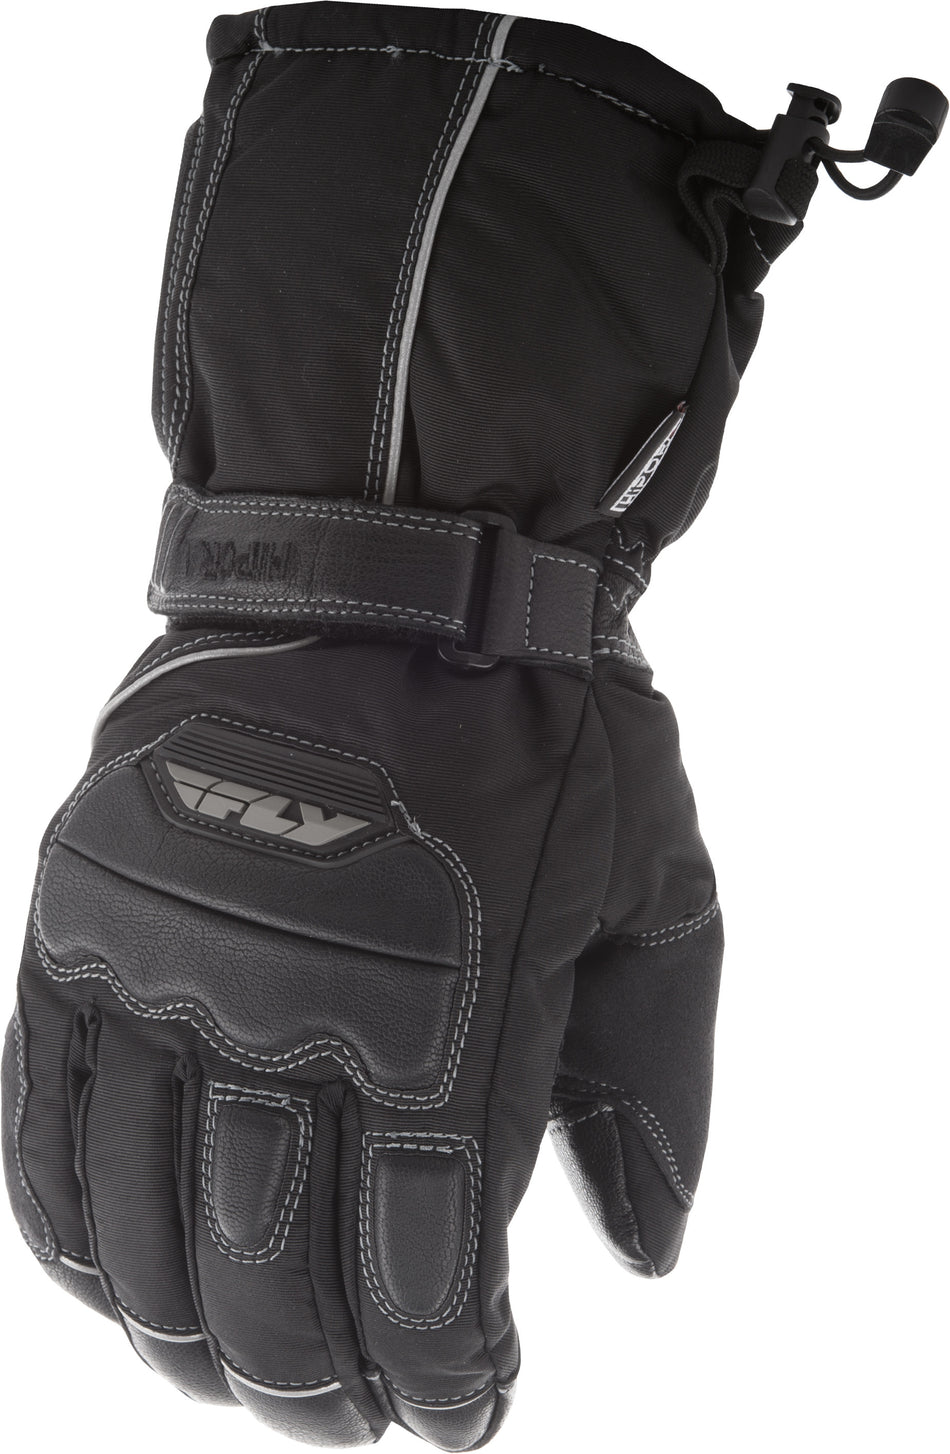 FLY RACING Aurora Gloves Black Sm 363-3891S